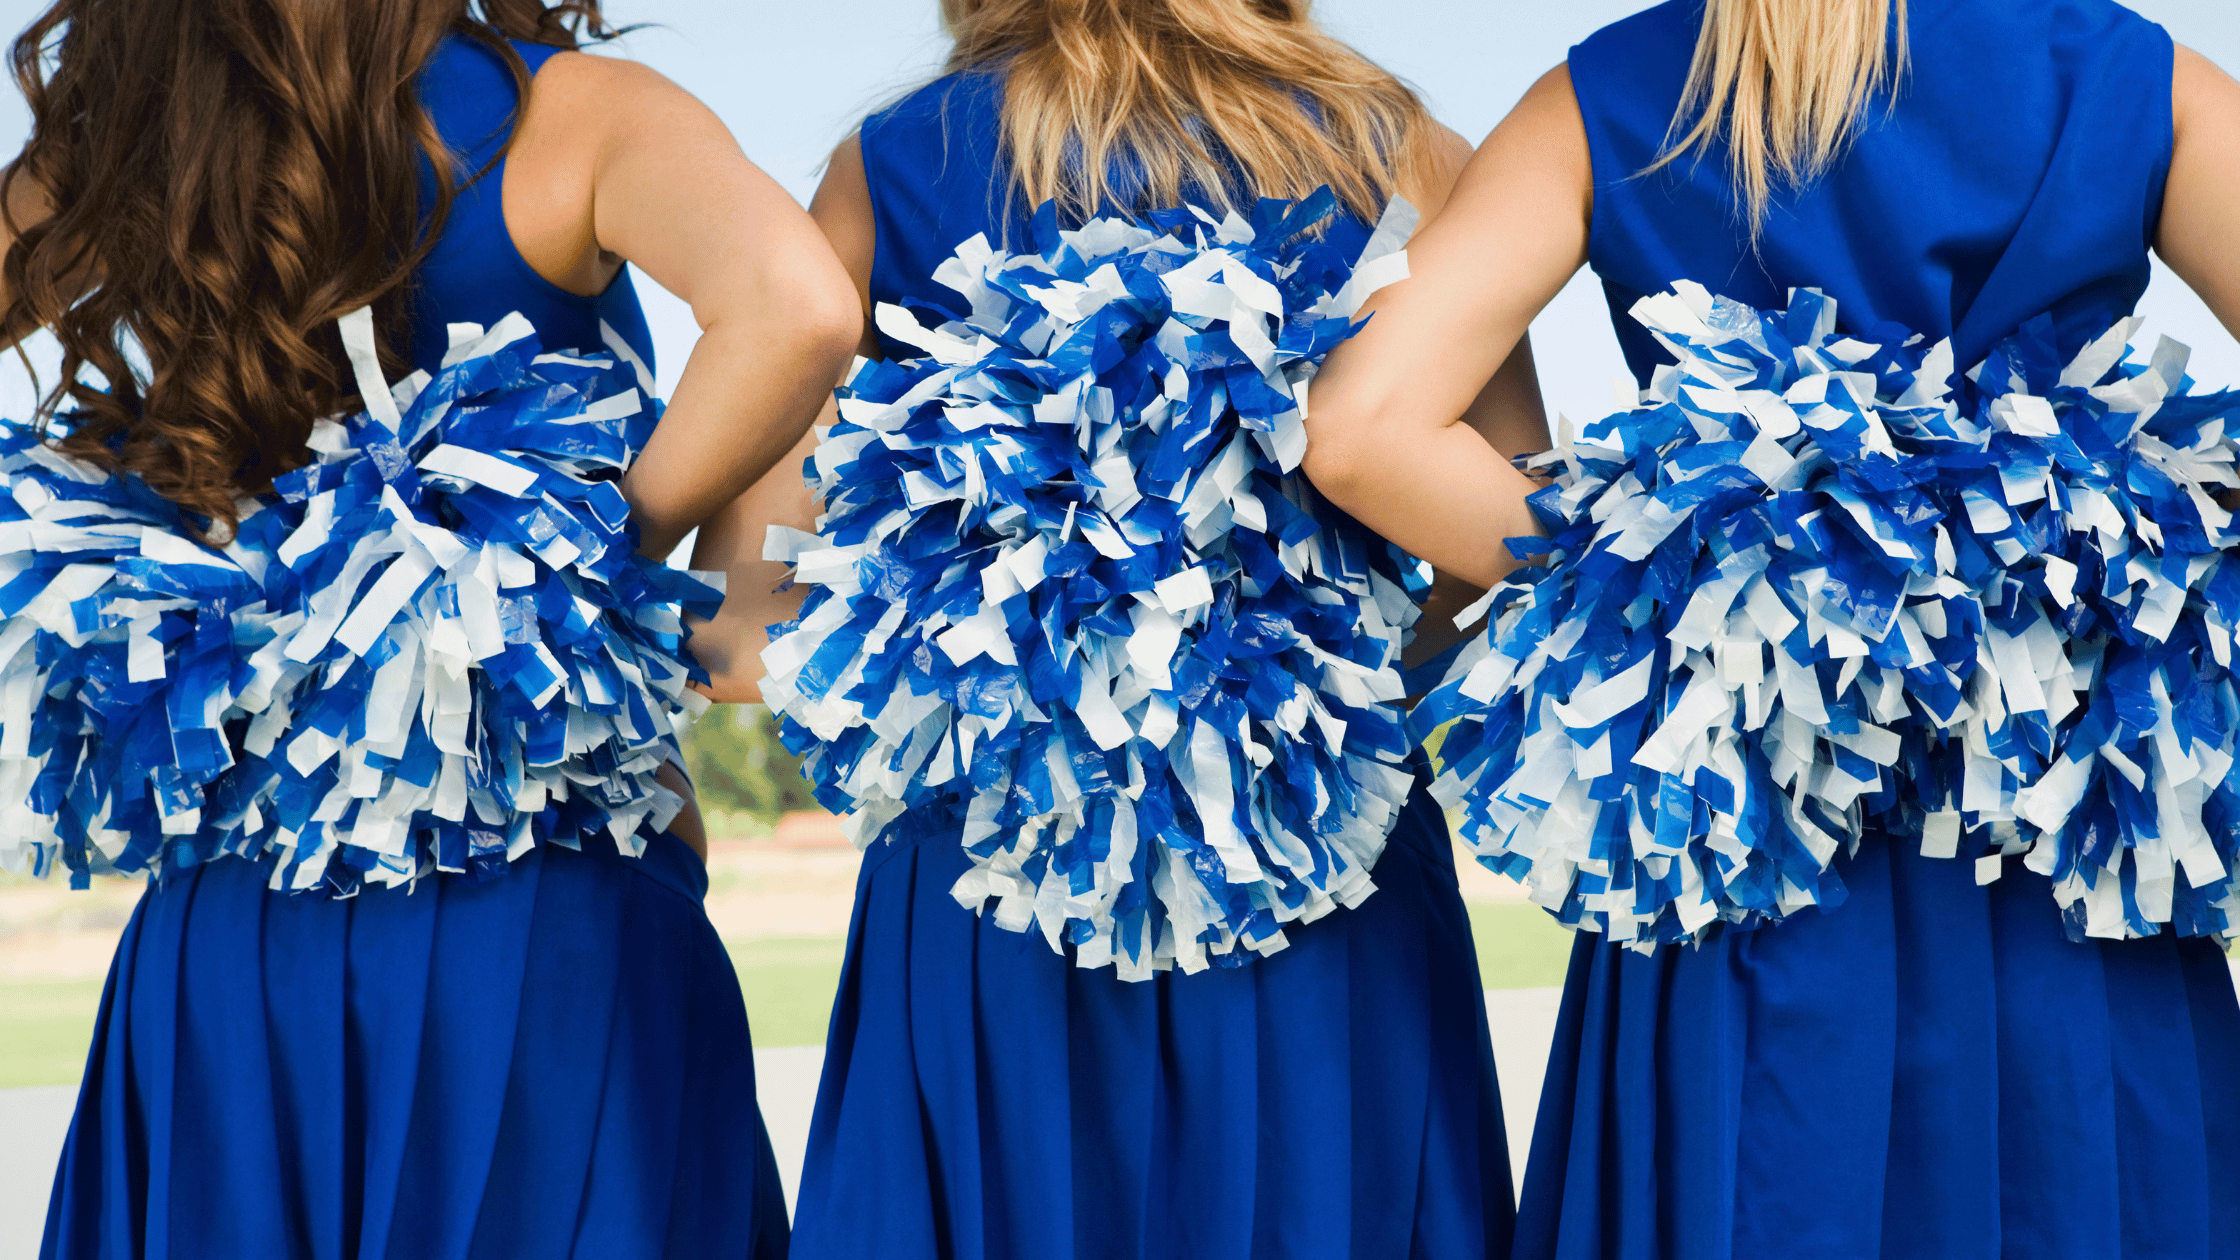 Stress Management for Cheerleaders: Understanding and Overcoming Challenges